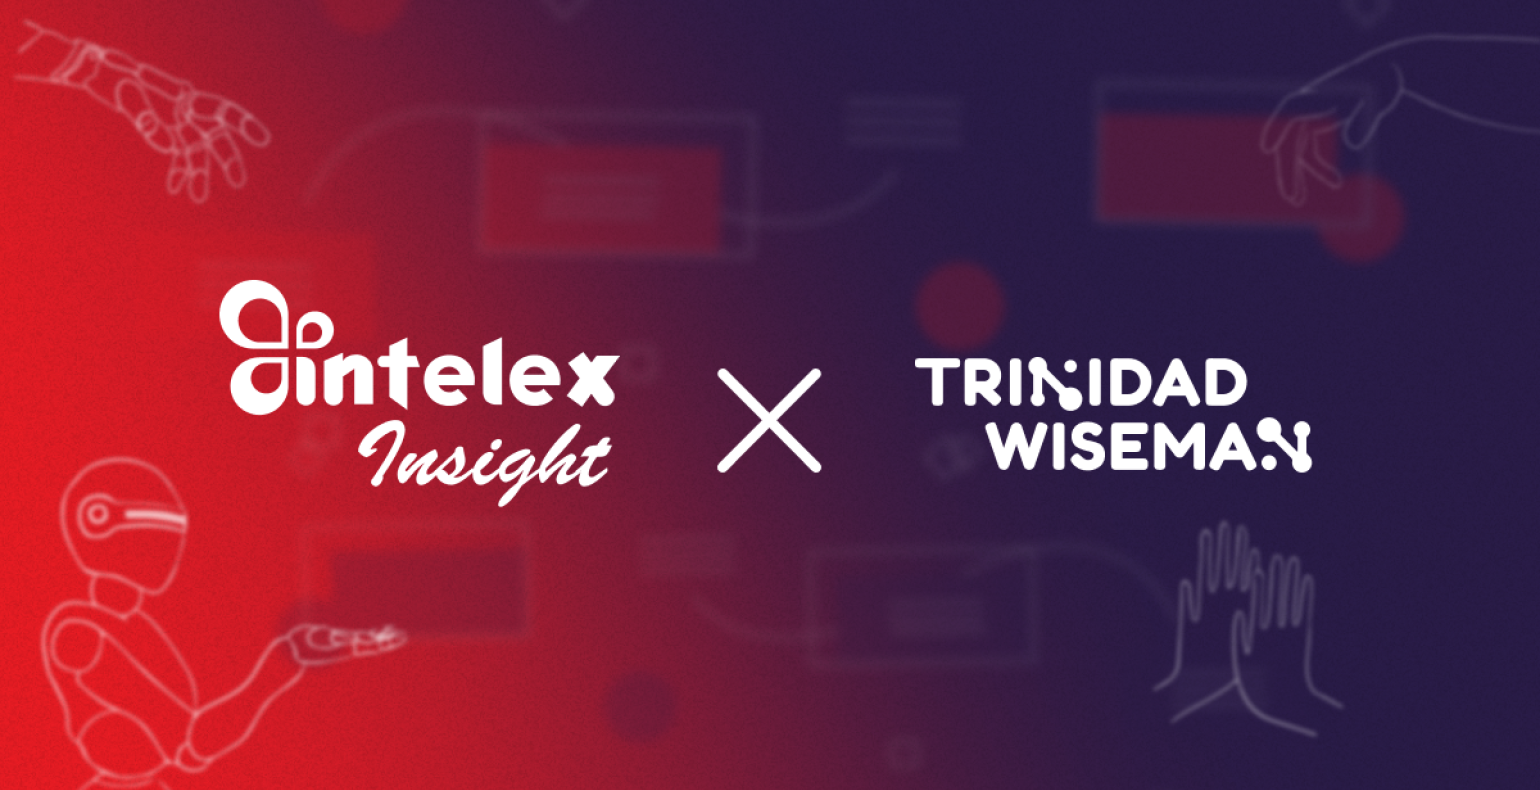 Intelex Insight logo and Trinidad Wiseman logo